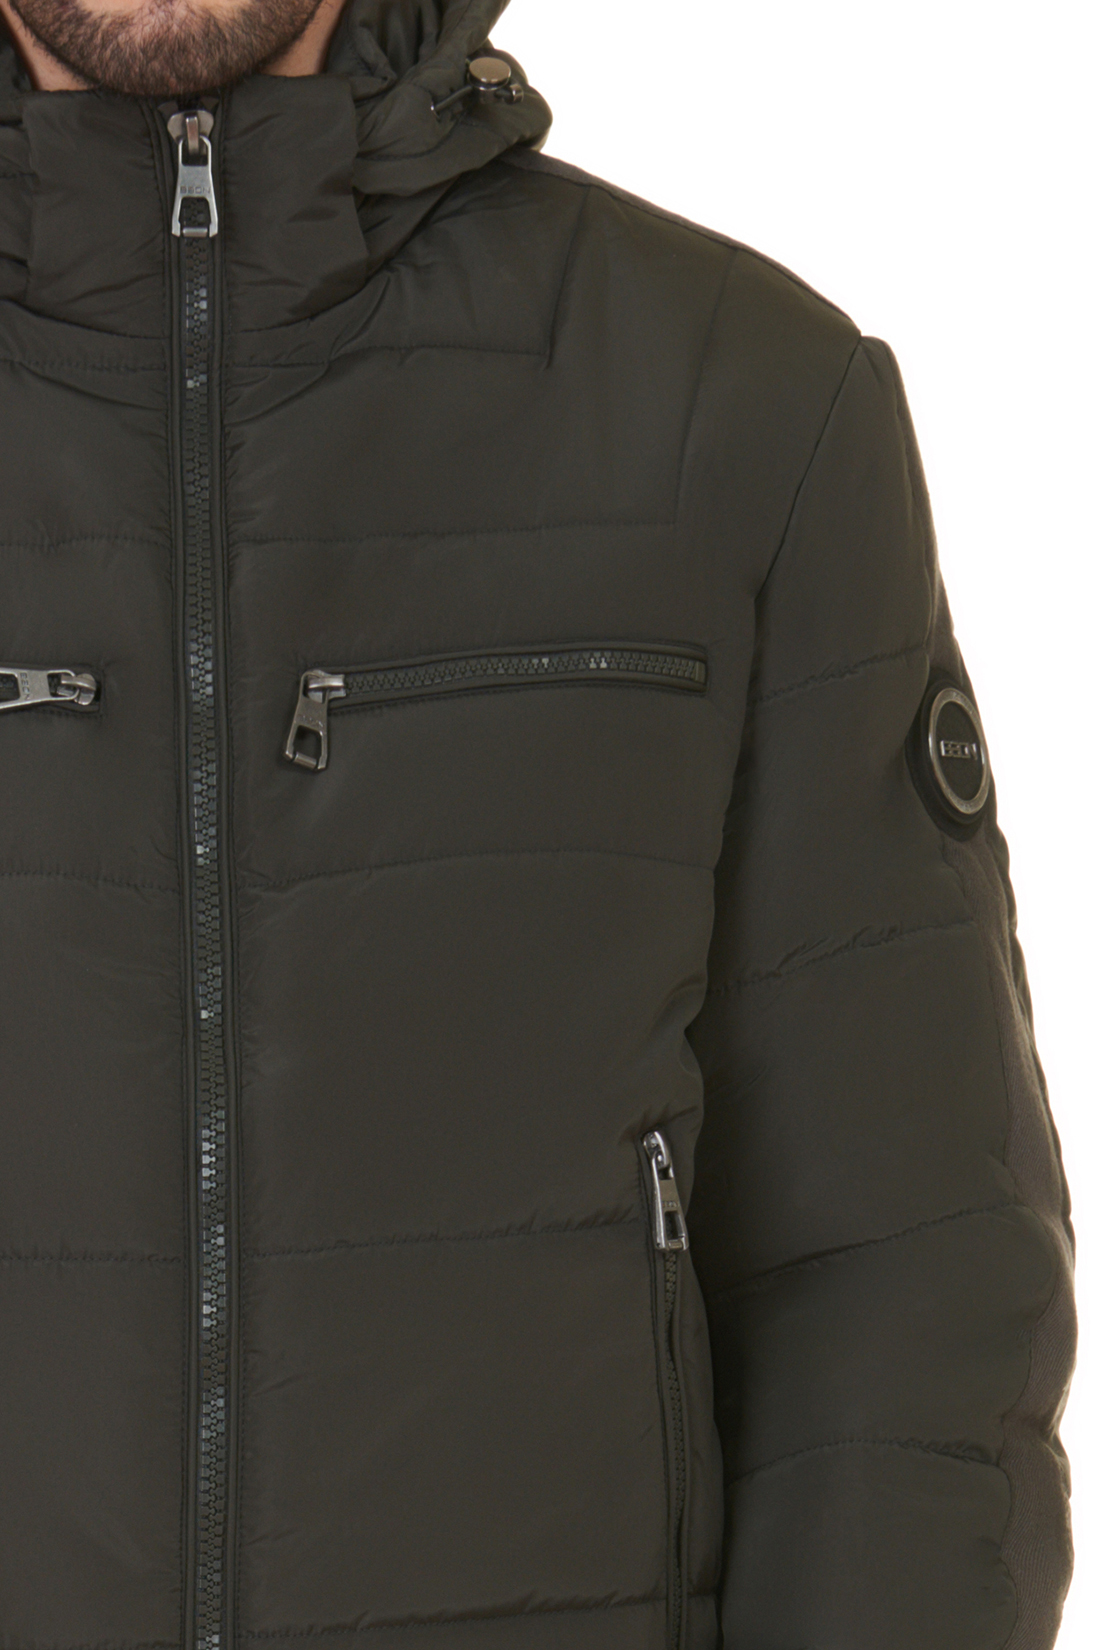 Куртка защитного цвета (арт. baon B537539), размер M Куртка защитного цвета (арт. baon B537539) - фото 4